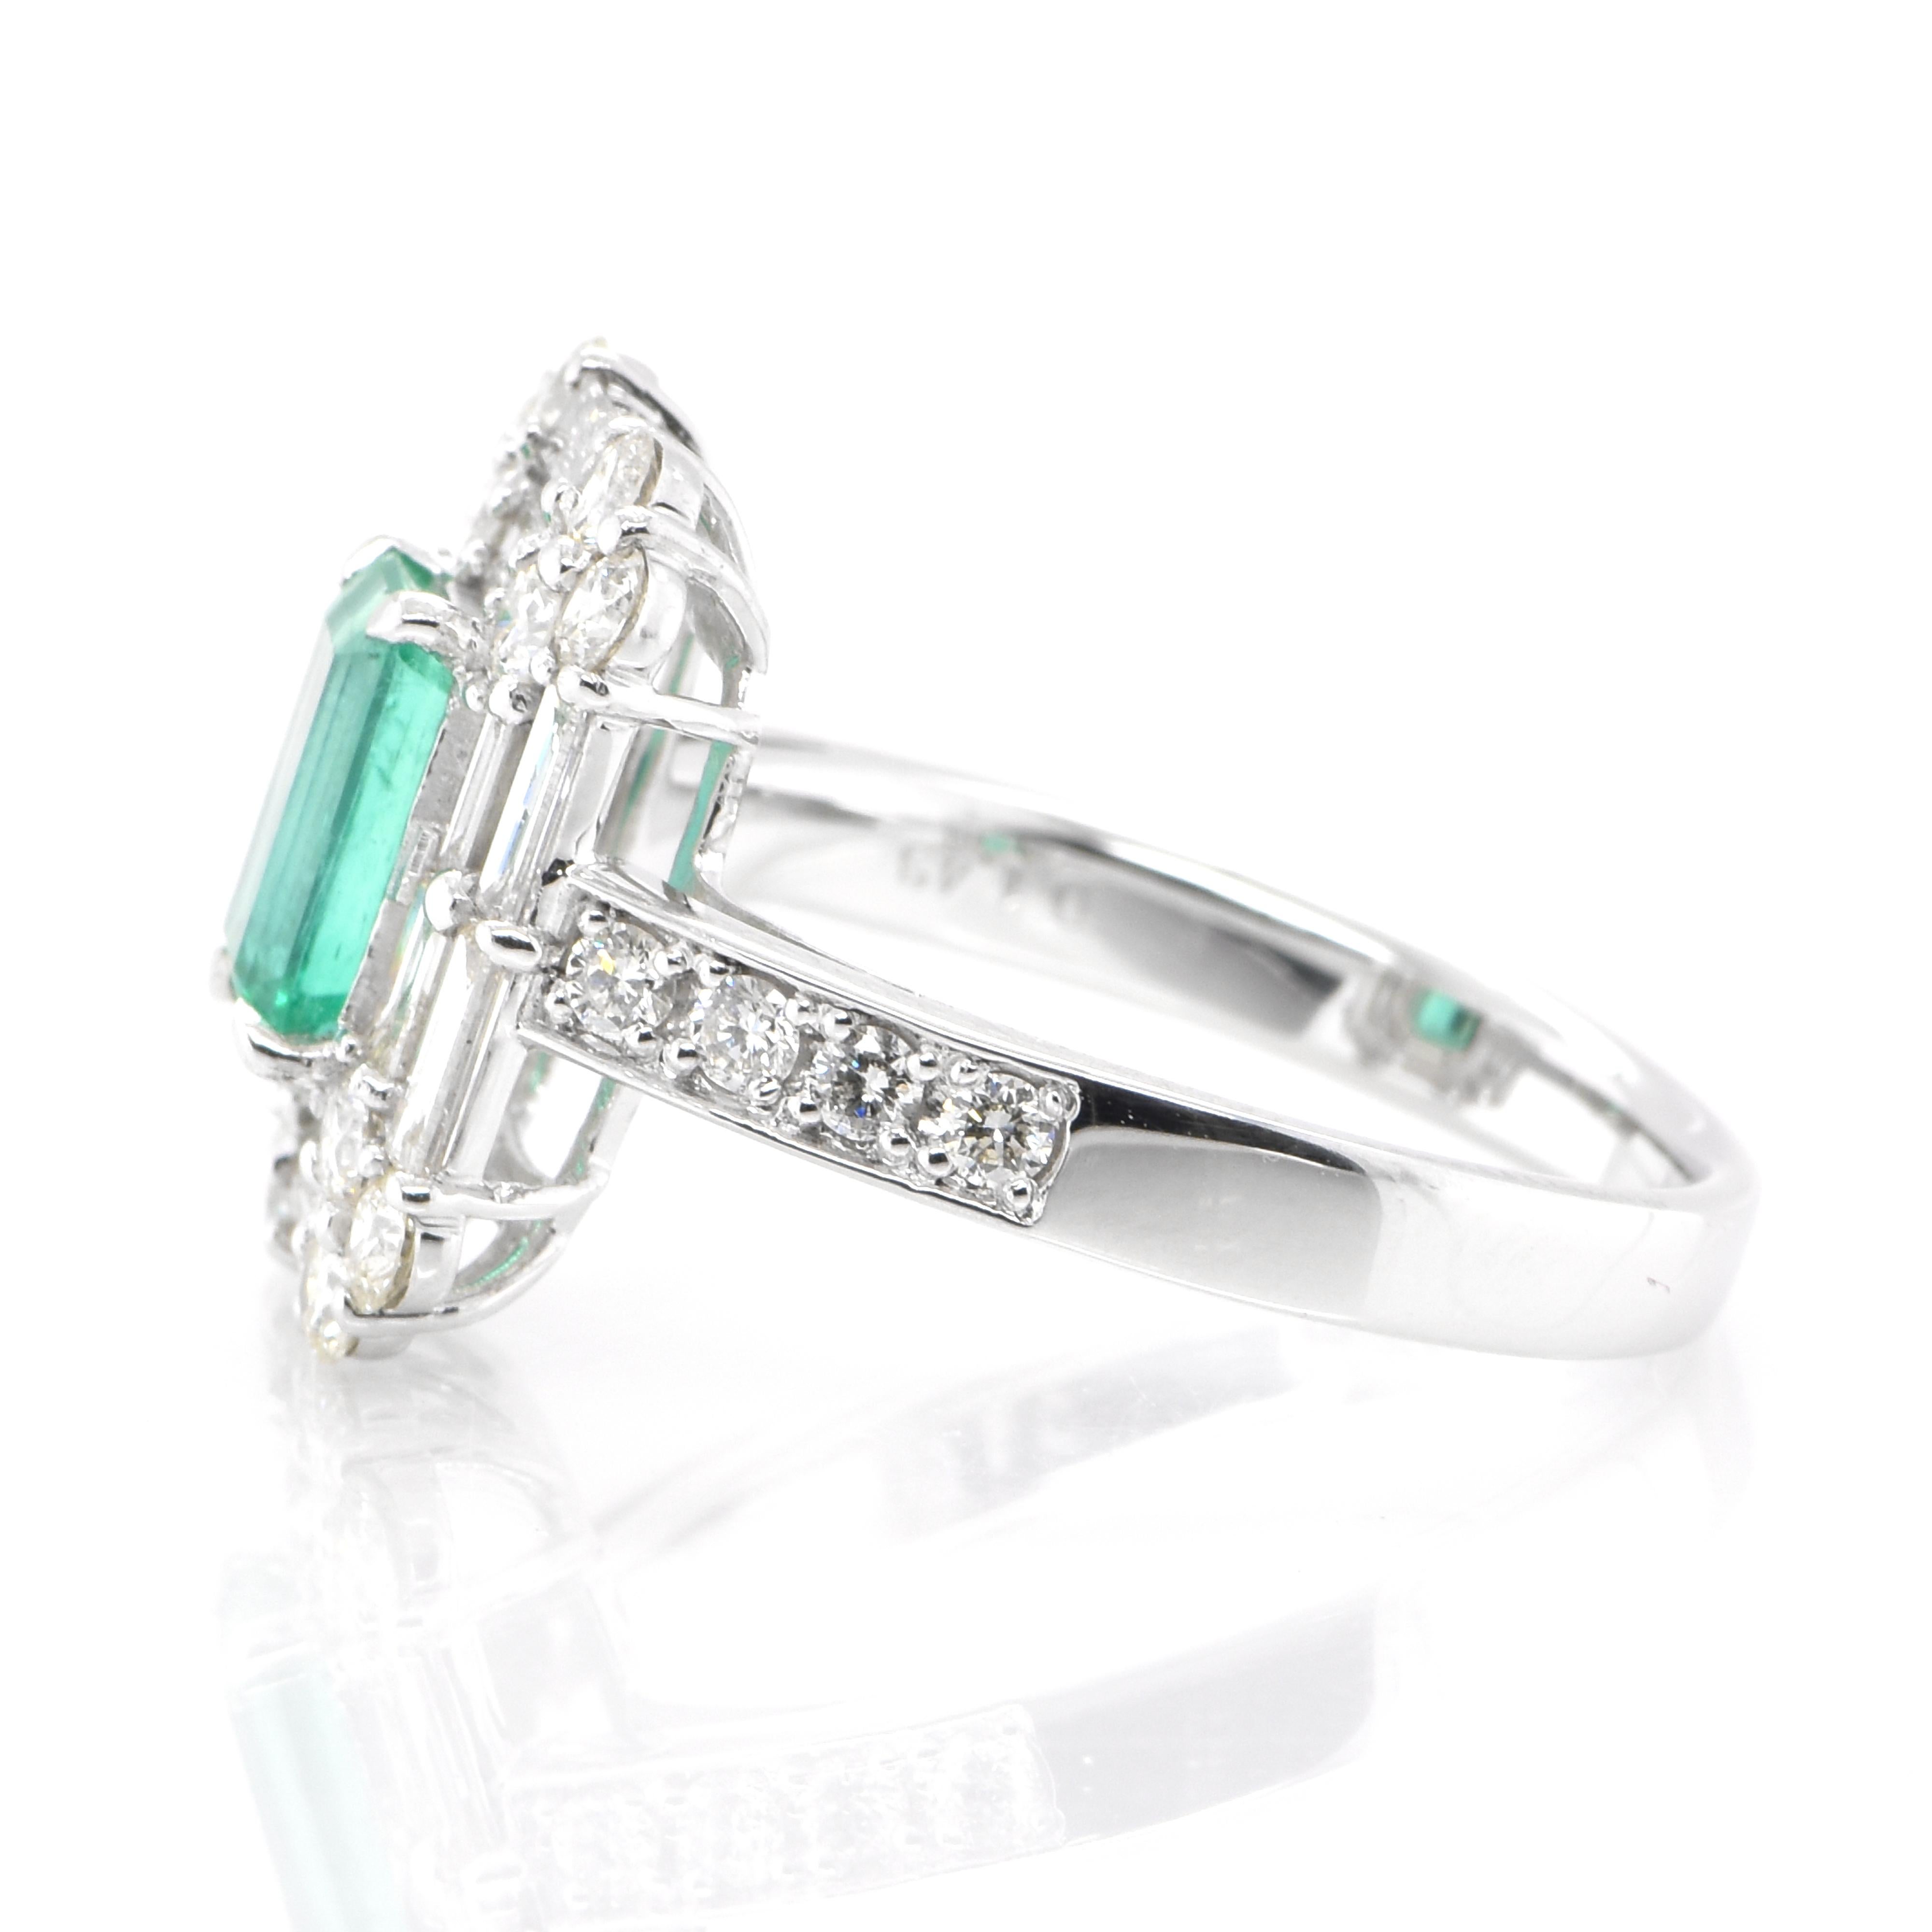 Emerald Cut 1.00 Carat Natural Emerald and Diamond Halo Cocktail Ring Set in Platinum